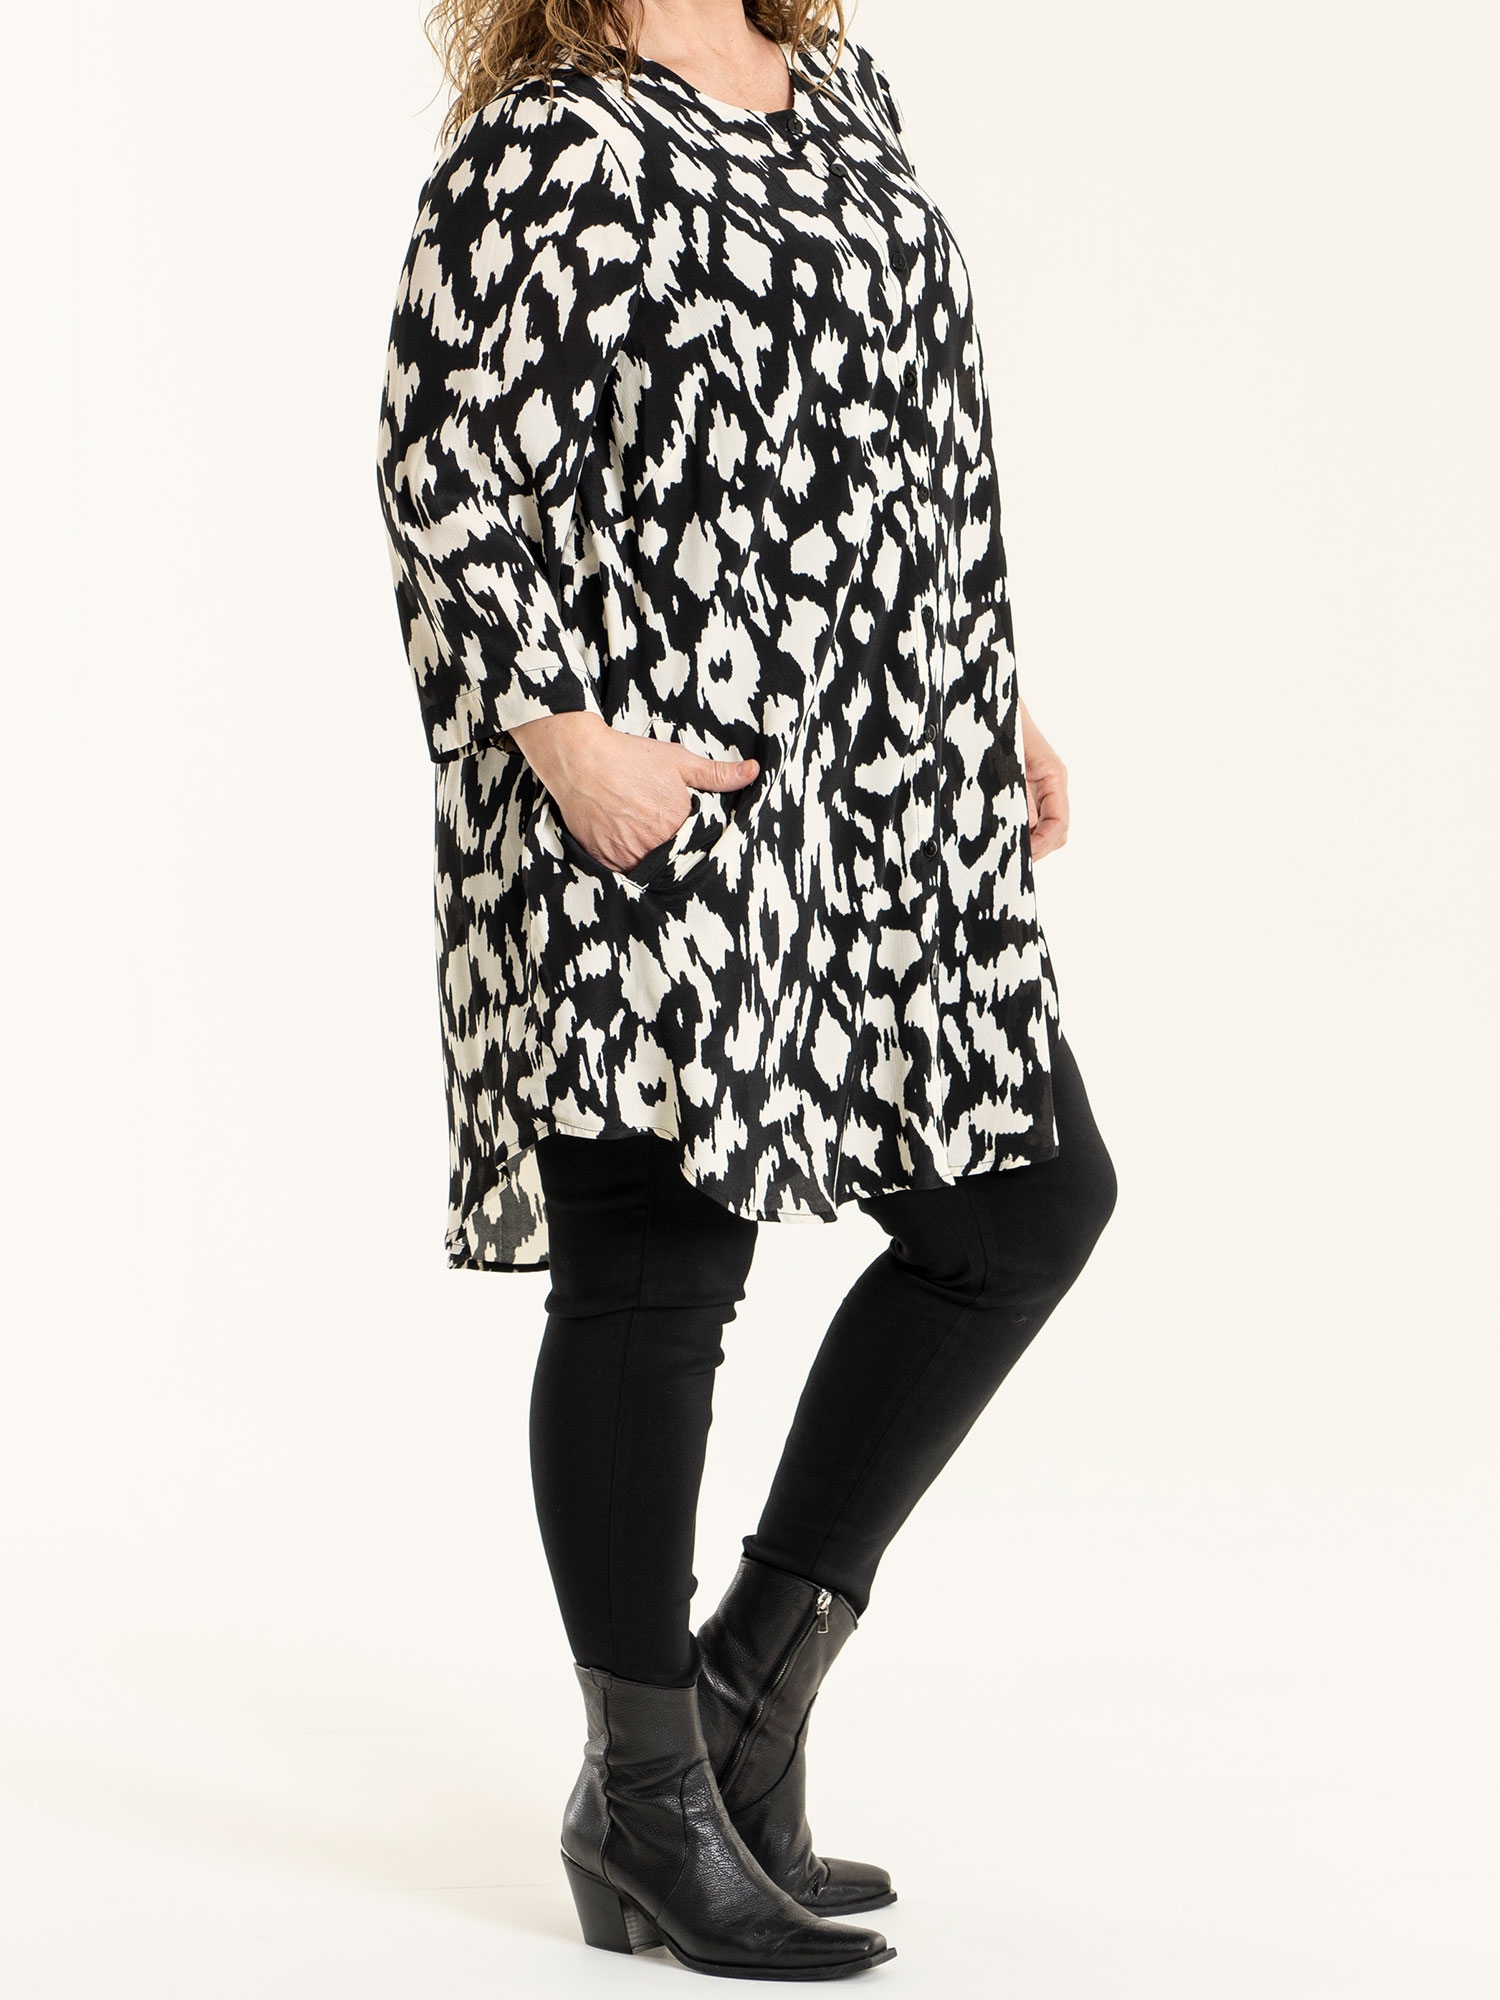 ELISABETH - Sort skjorte tunika i viskose med print fra Gozzip